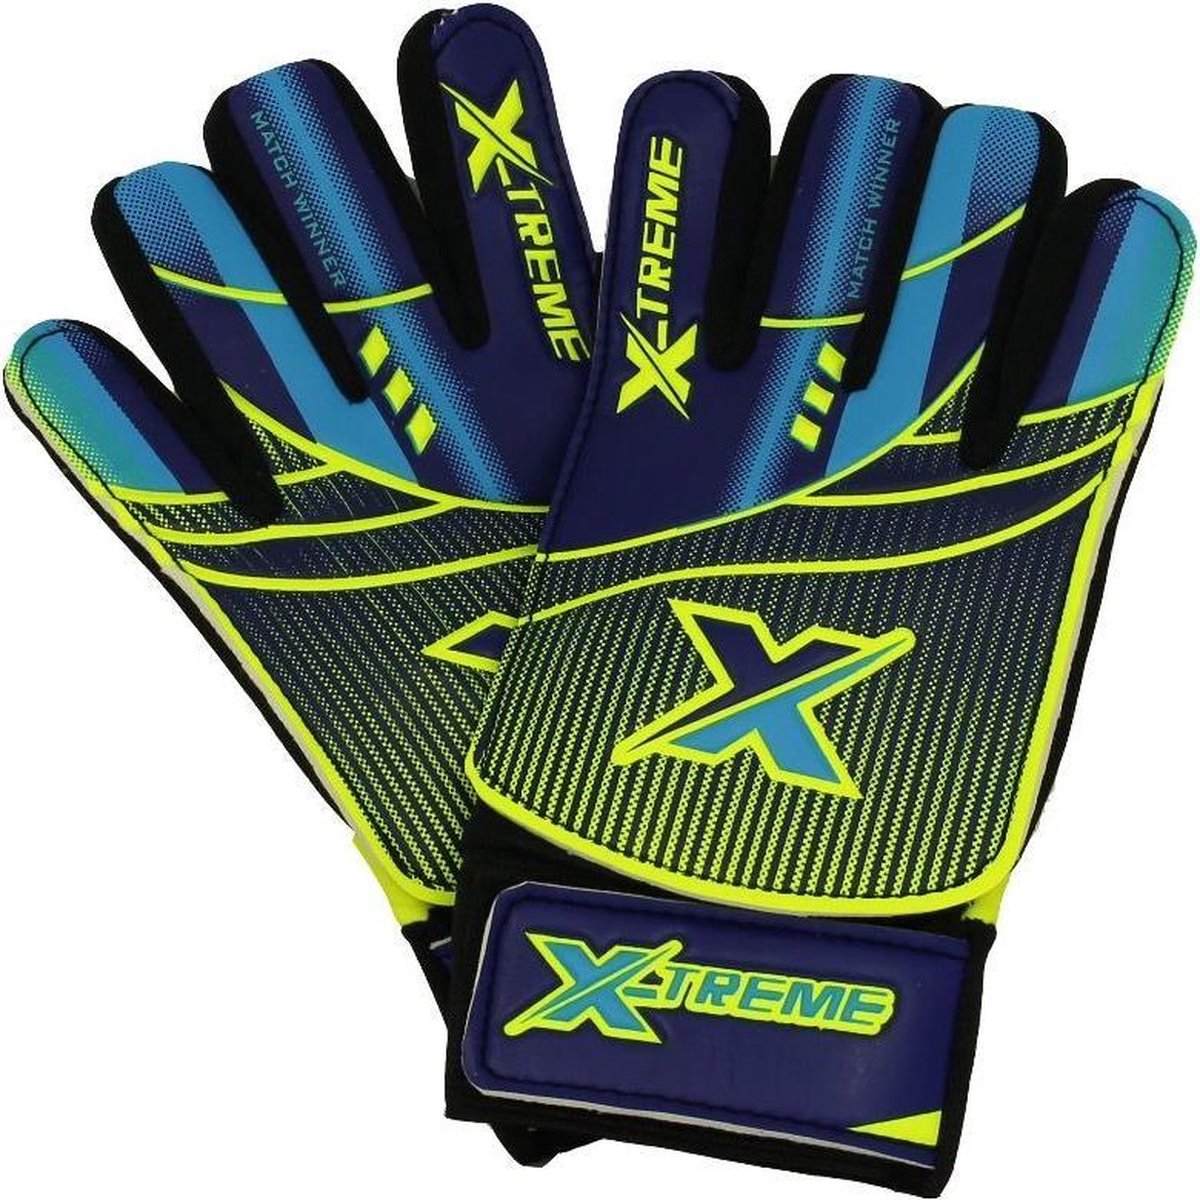 Xtreme keeperhandschoen sz6 -blauw